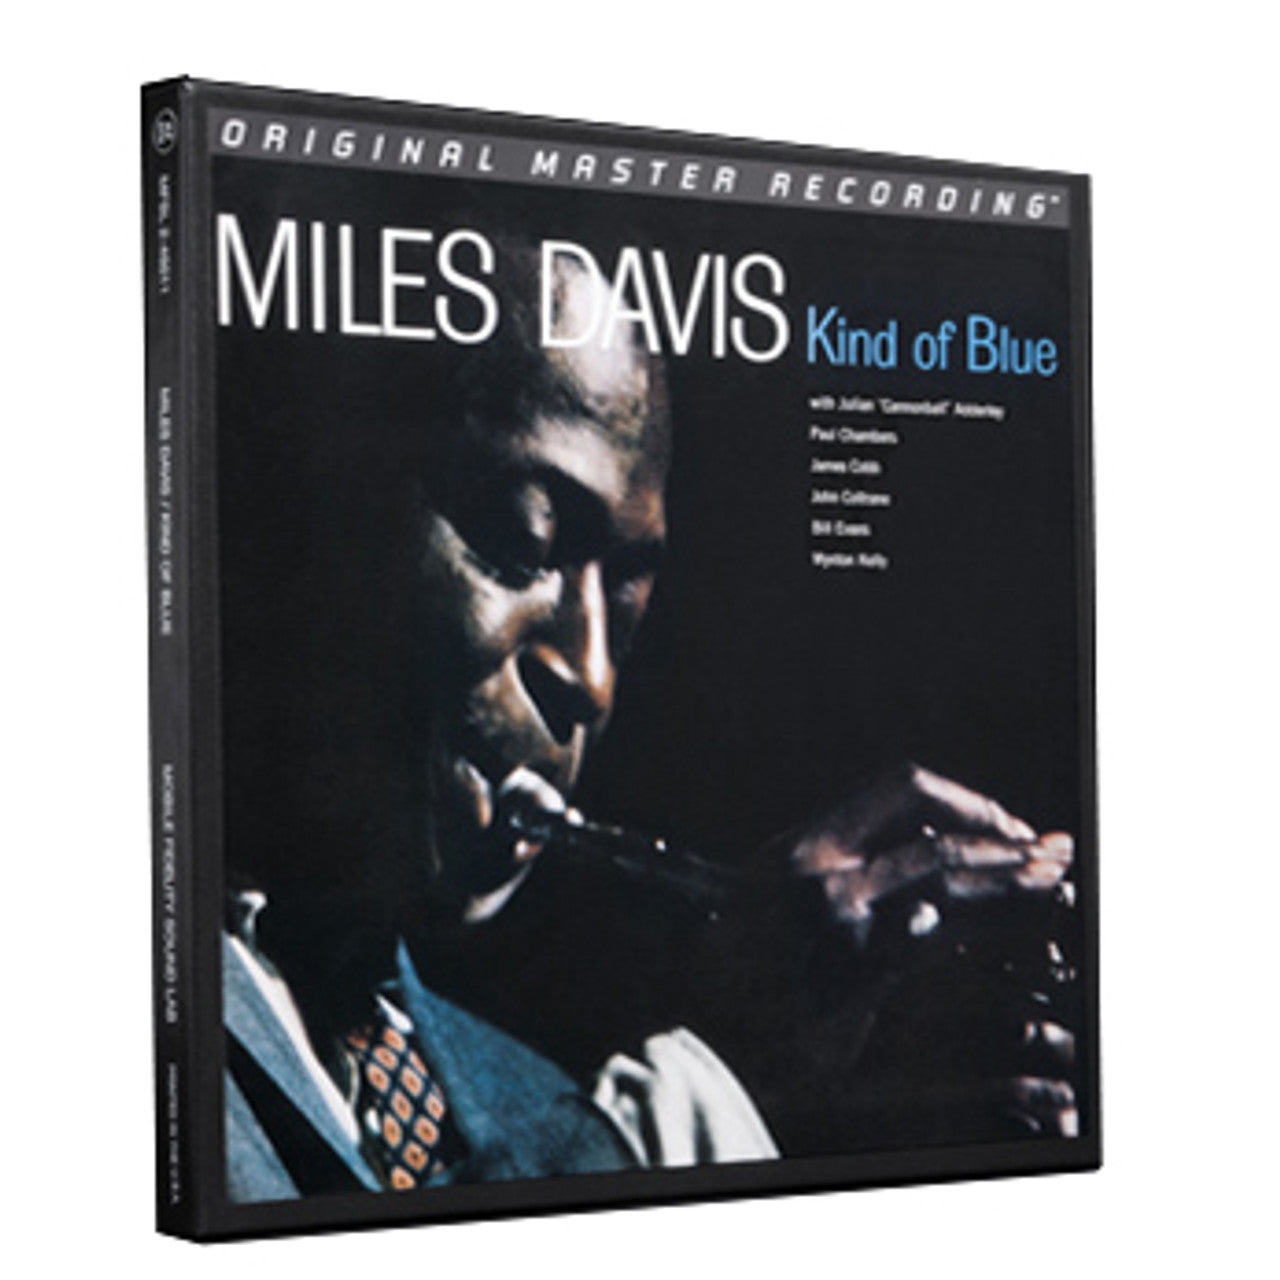 Miles Davis - Kind Of Blue [2LP Box] (180 Gram 45RPM Audiophile Vinyl, limited/hand-numbered) MOBILE FIDELITY